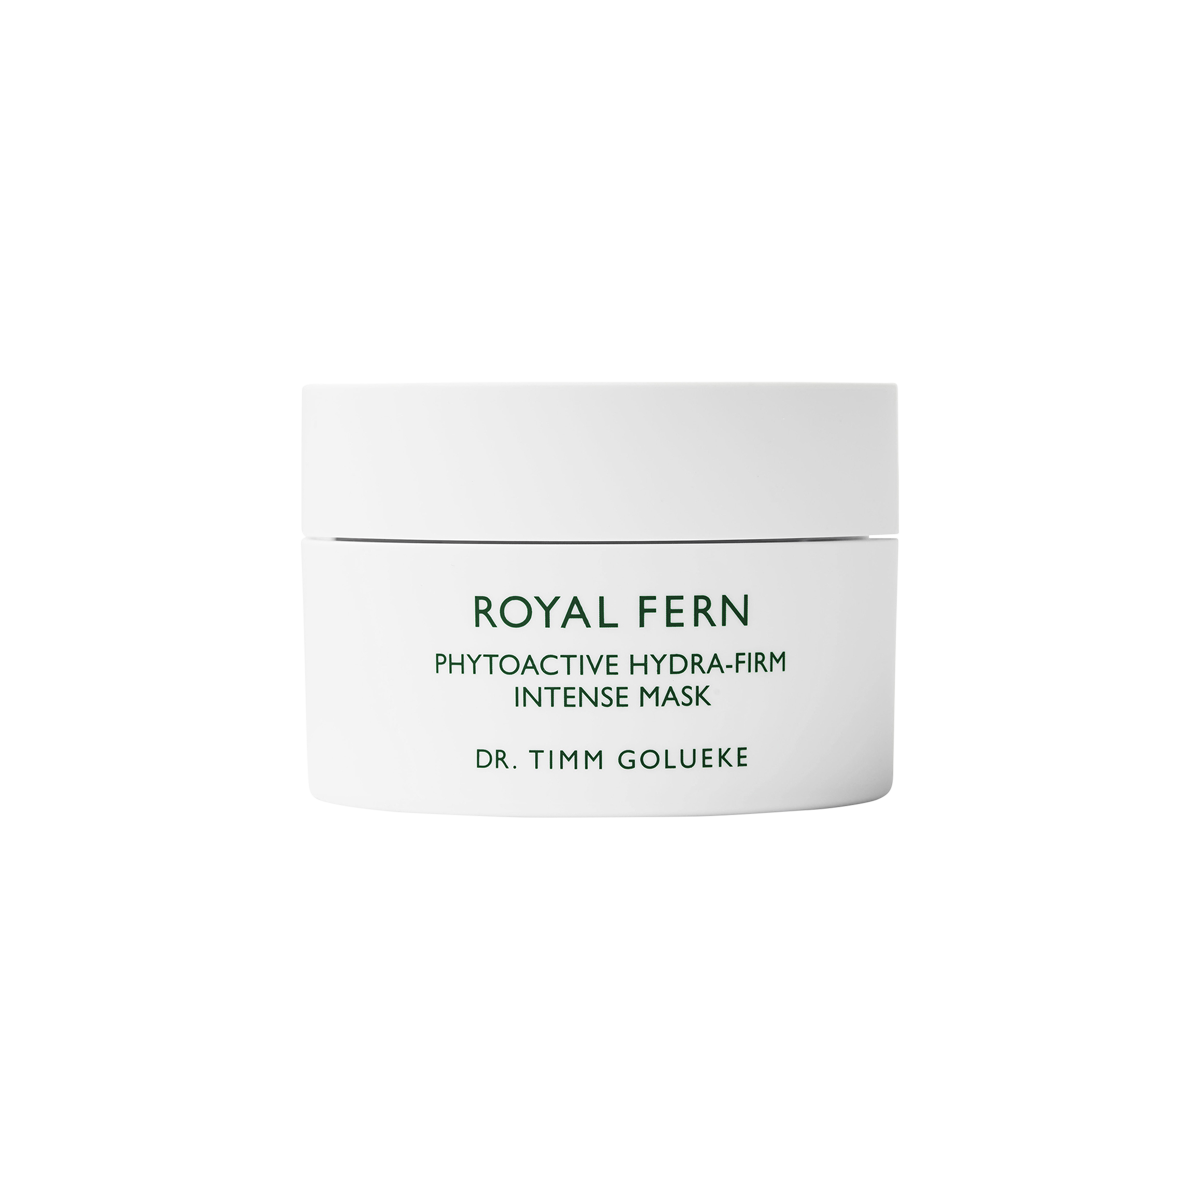 Royal Fern - Phytoactive Hydra-Firm Intense Mask